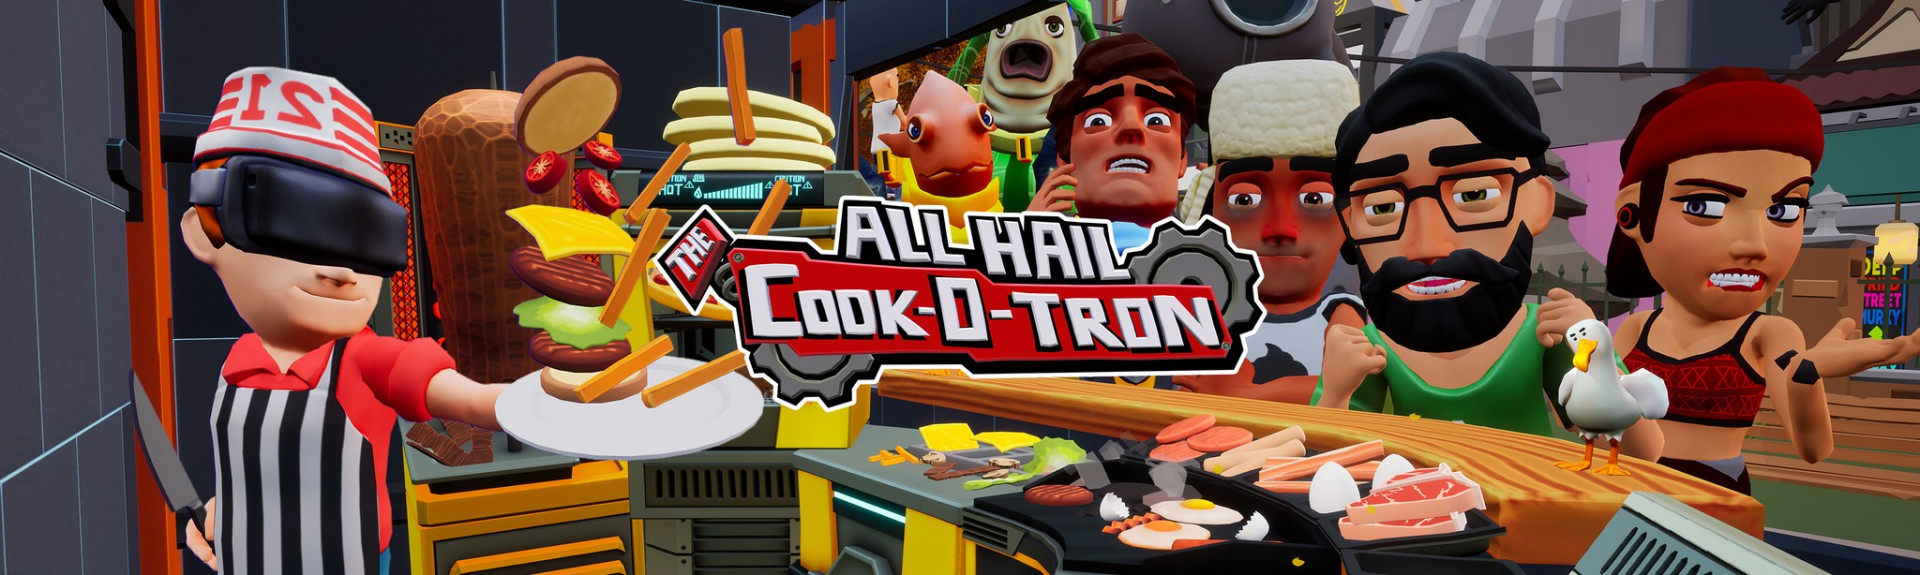 All Hail the Cook-o-tron